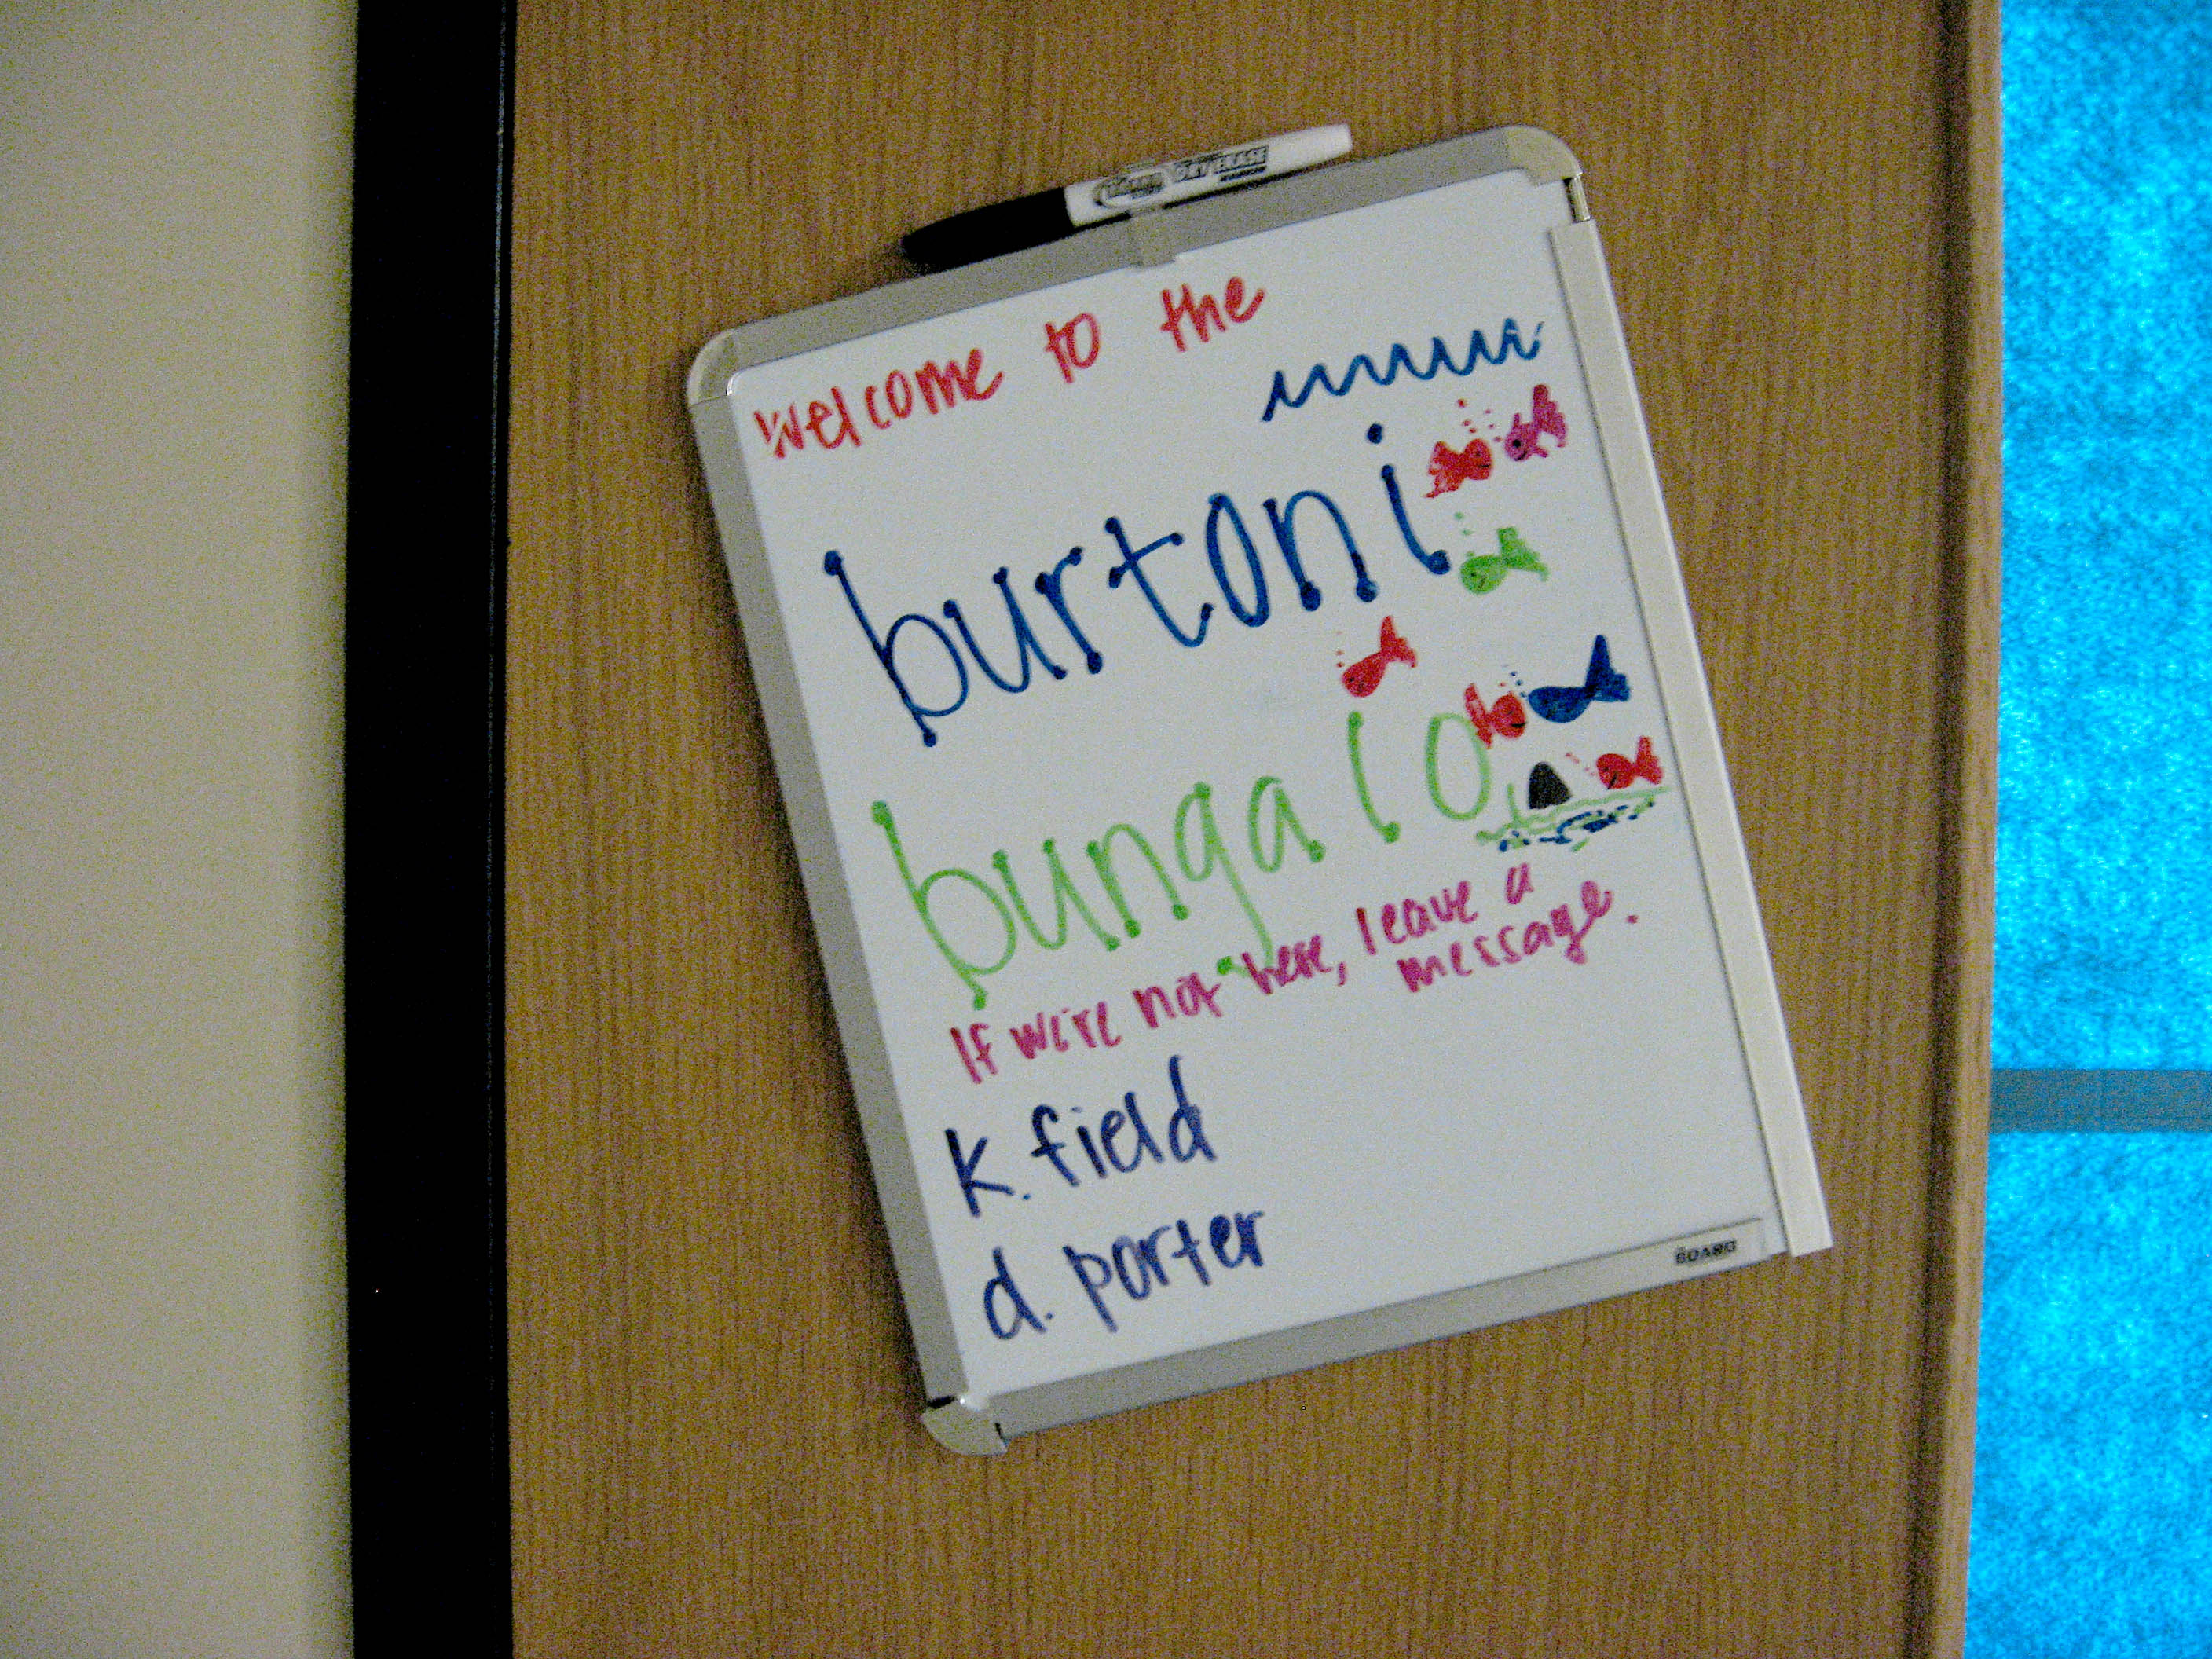 burtoni bungalo sign on the lab door